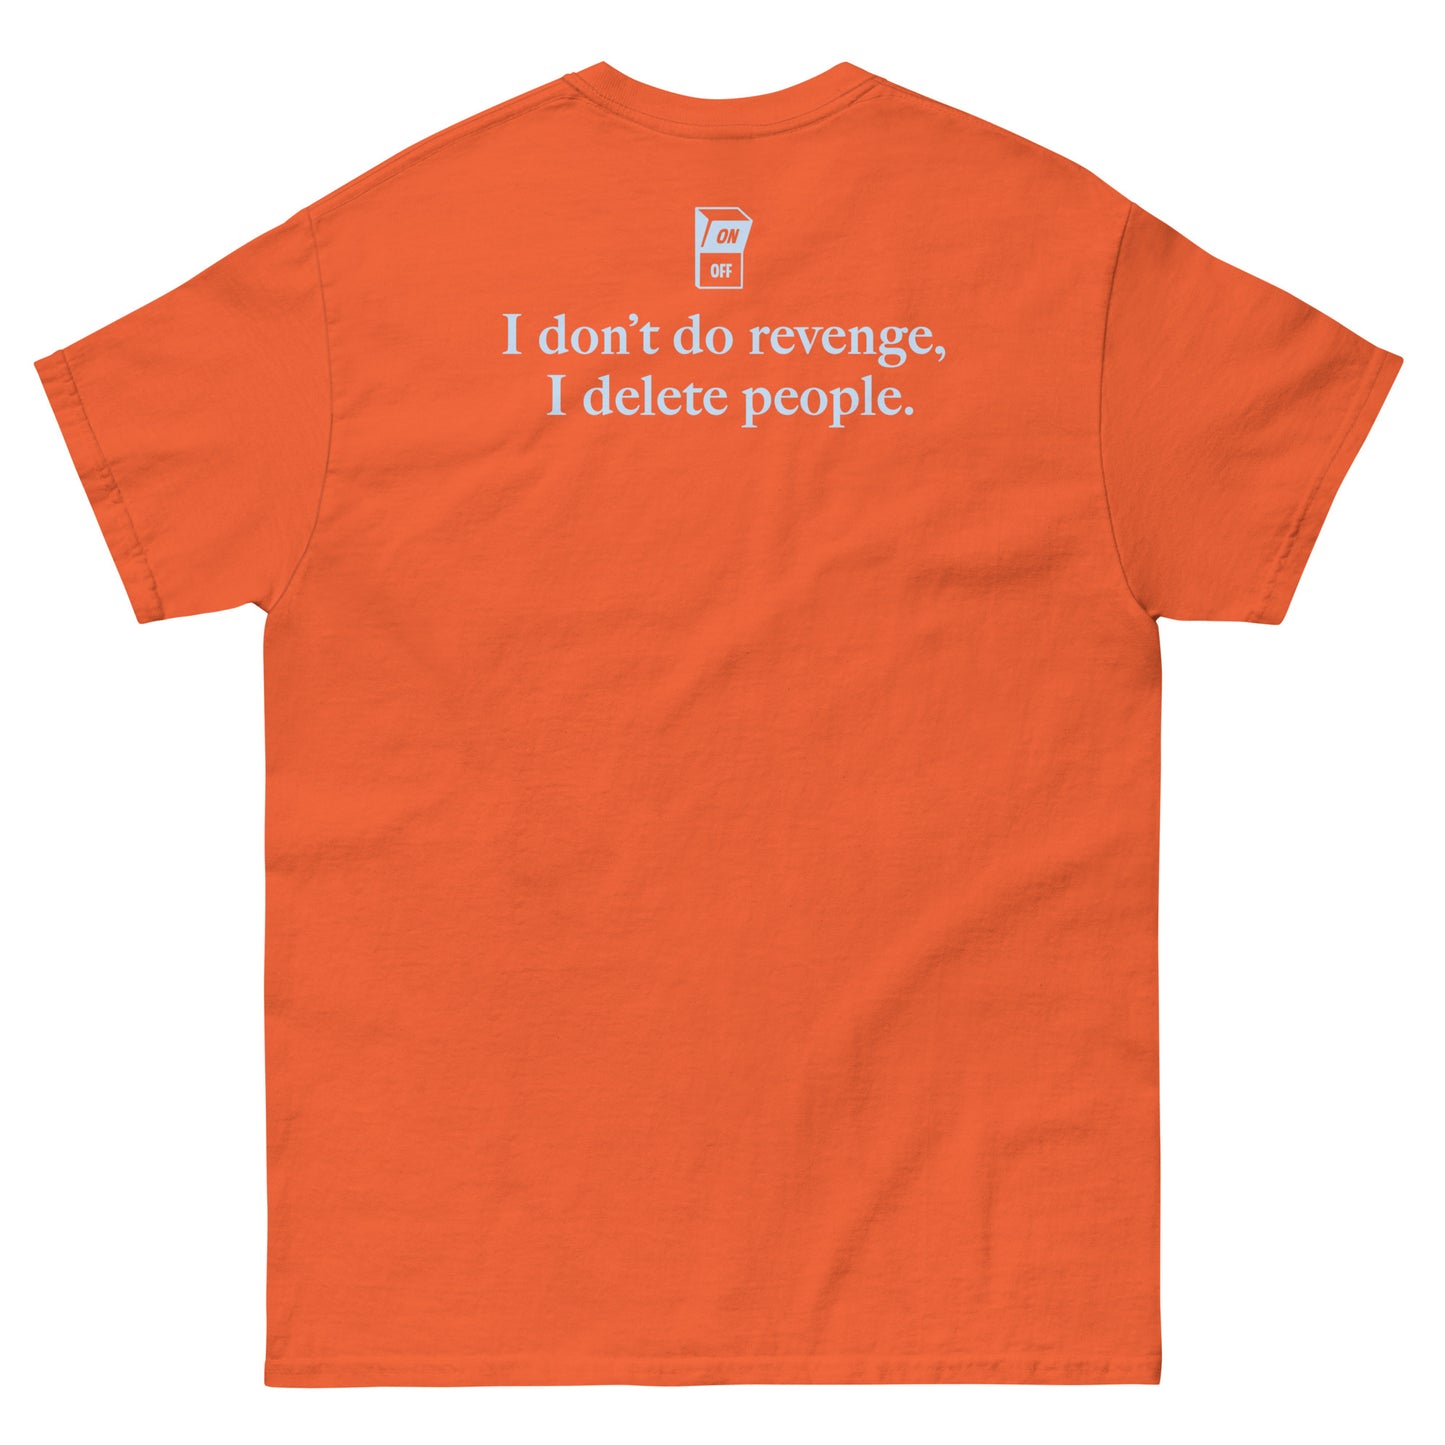 Orange High Quality Tee - Front Design with "I don't do revenge, I delete people. " print on left chest - Back Design with a Phrase "I don't do revenge, I delete people." print